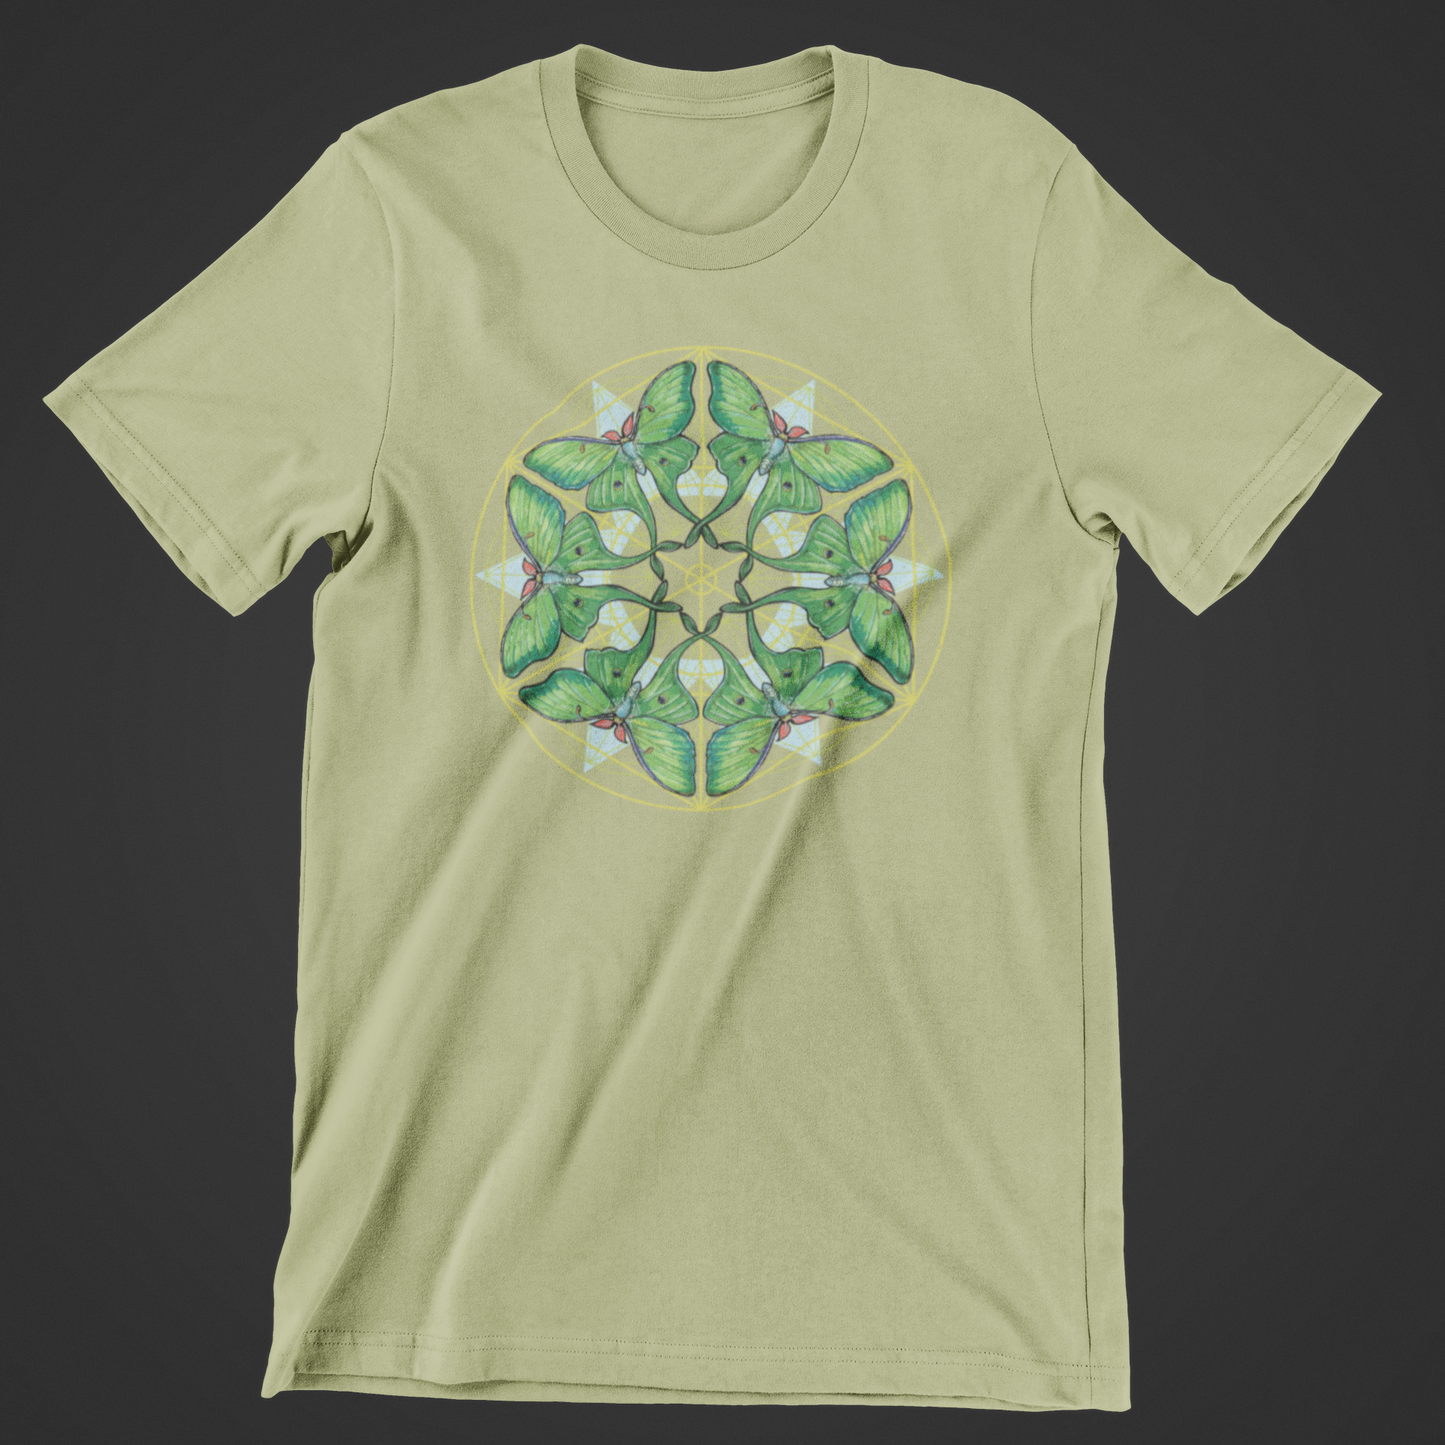 Luna Moth Mandala design t-shirt